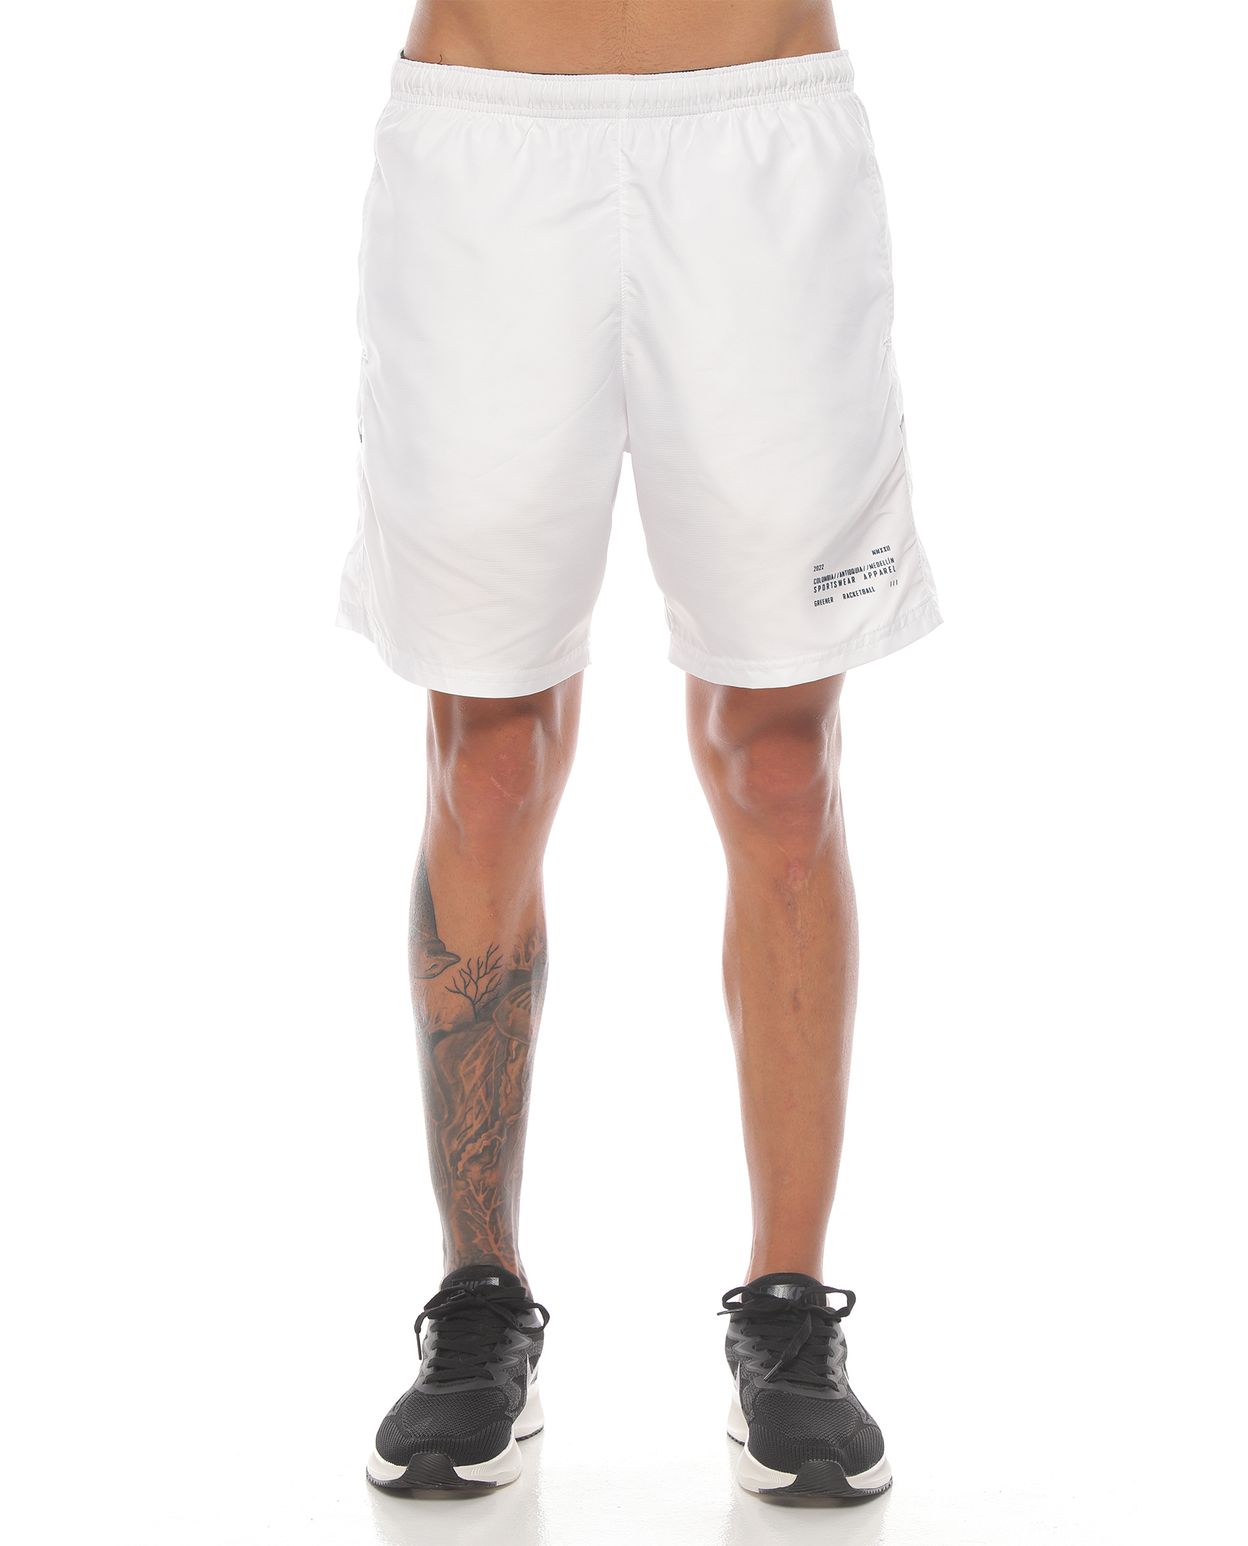 pantaloneta deportiva blanca para hombre